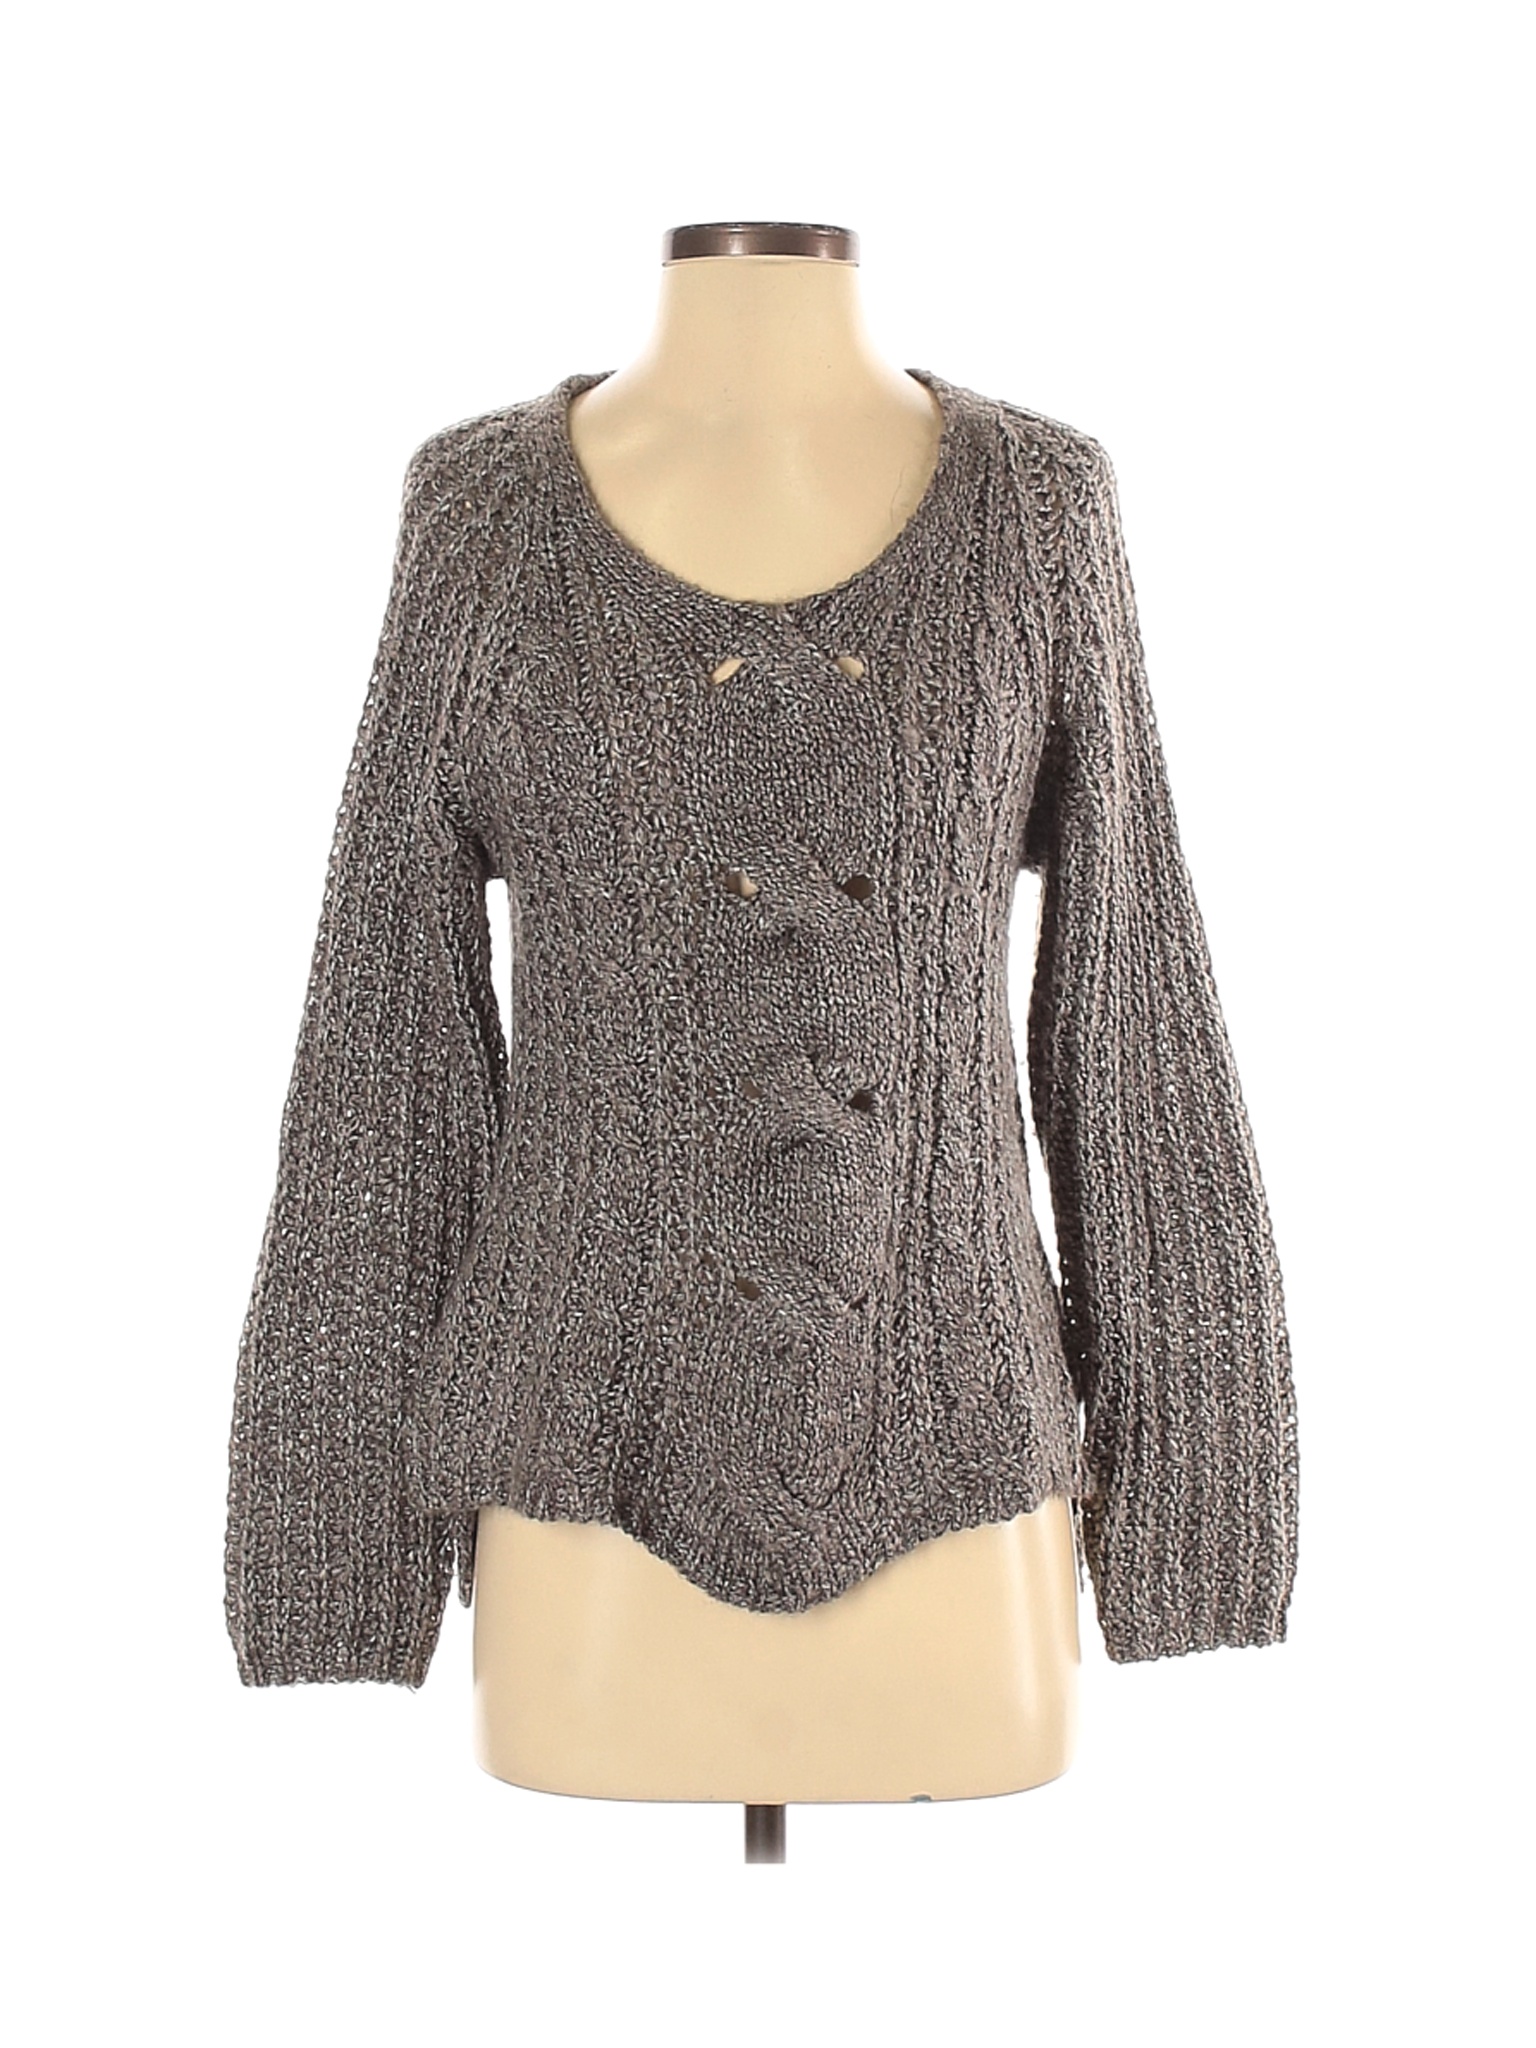 Nic + Zoe Women Gray Pullover Sweater M | eBay